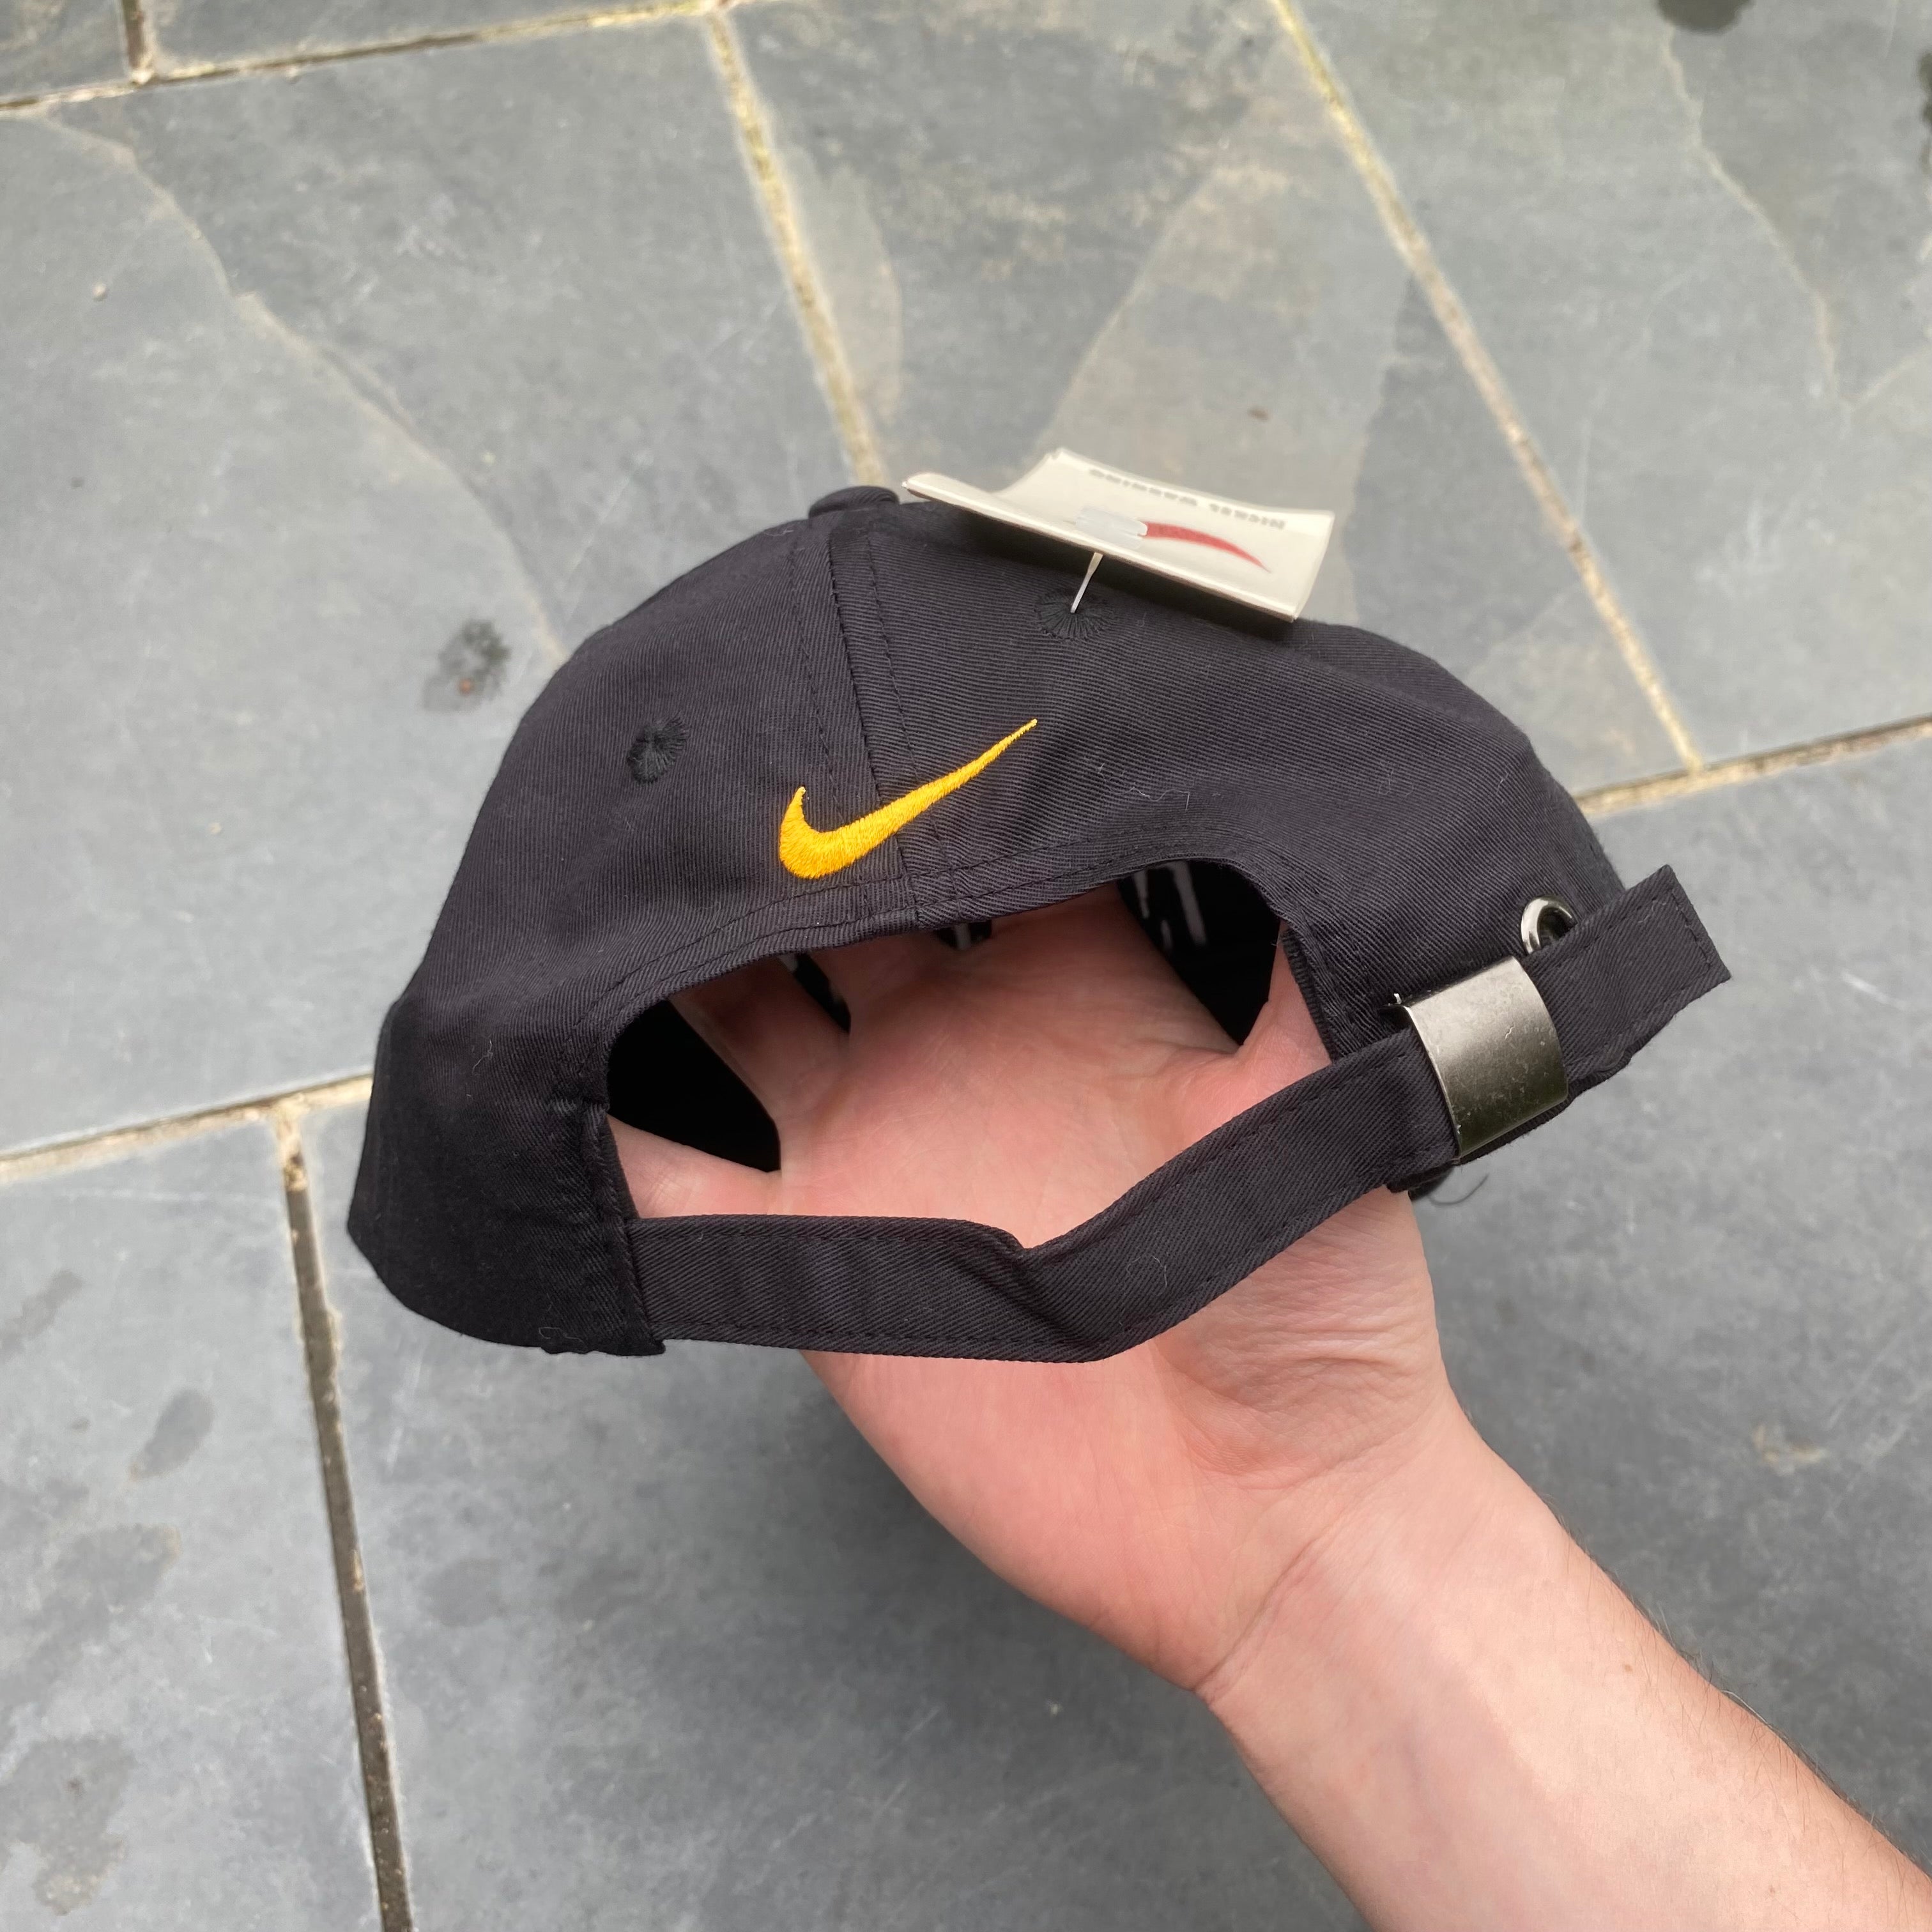 Nike Swoosh Hat - Black